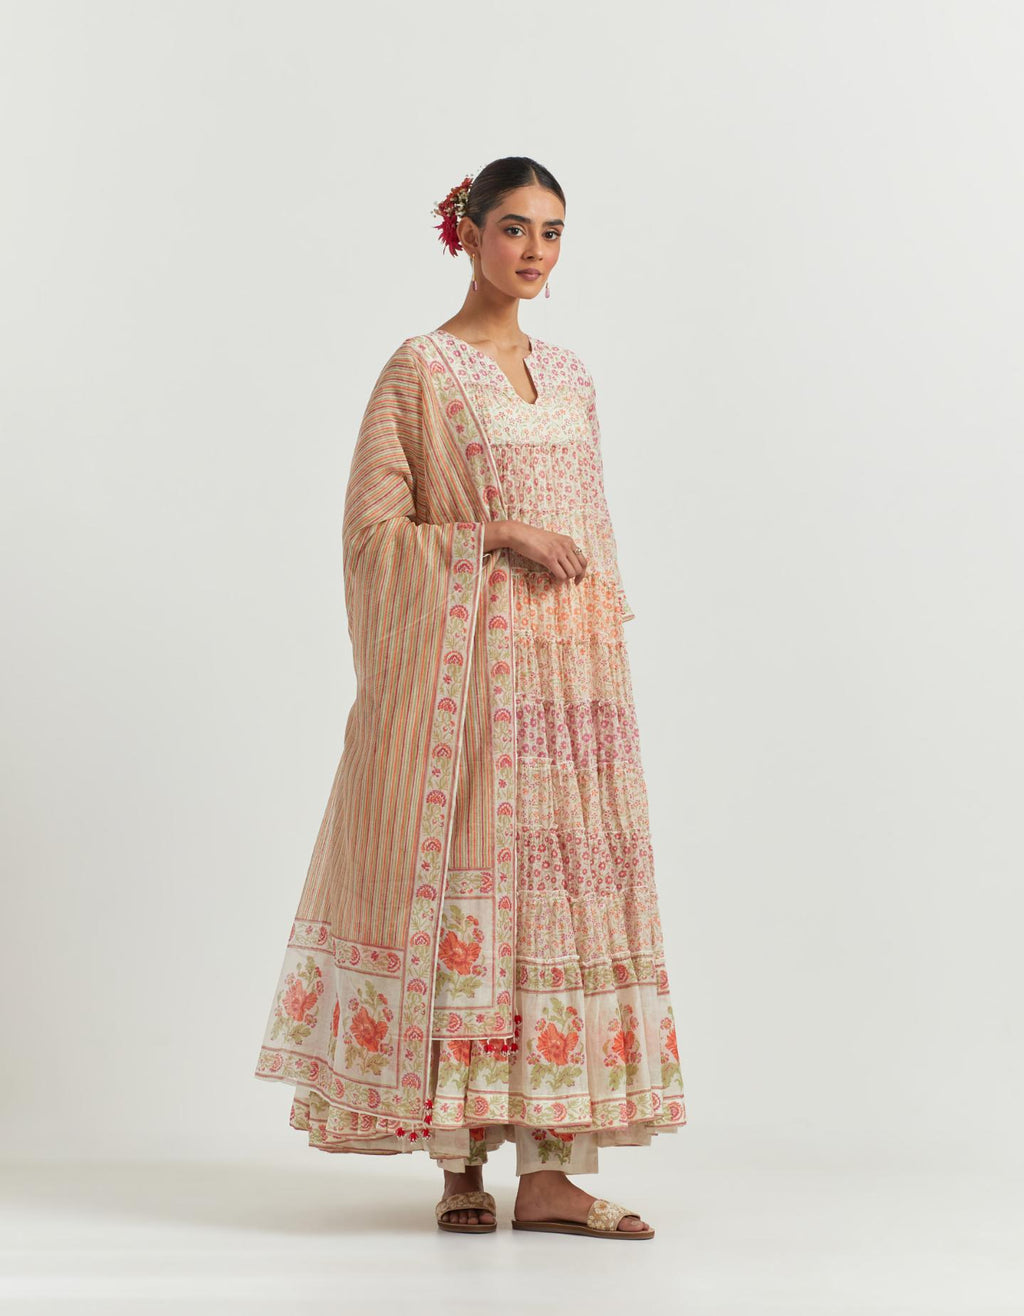 Multi colored hand block printed multi-tiered kurta dress set with 3/4 sleeves.